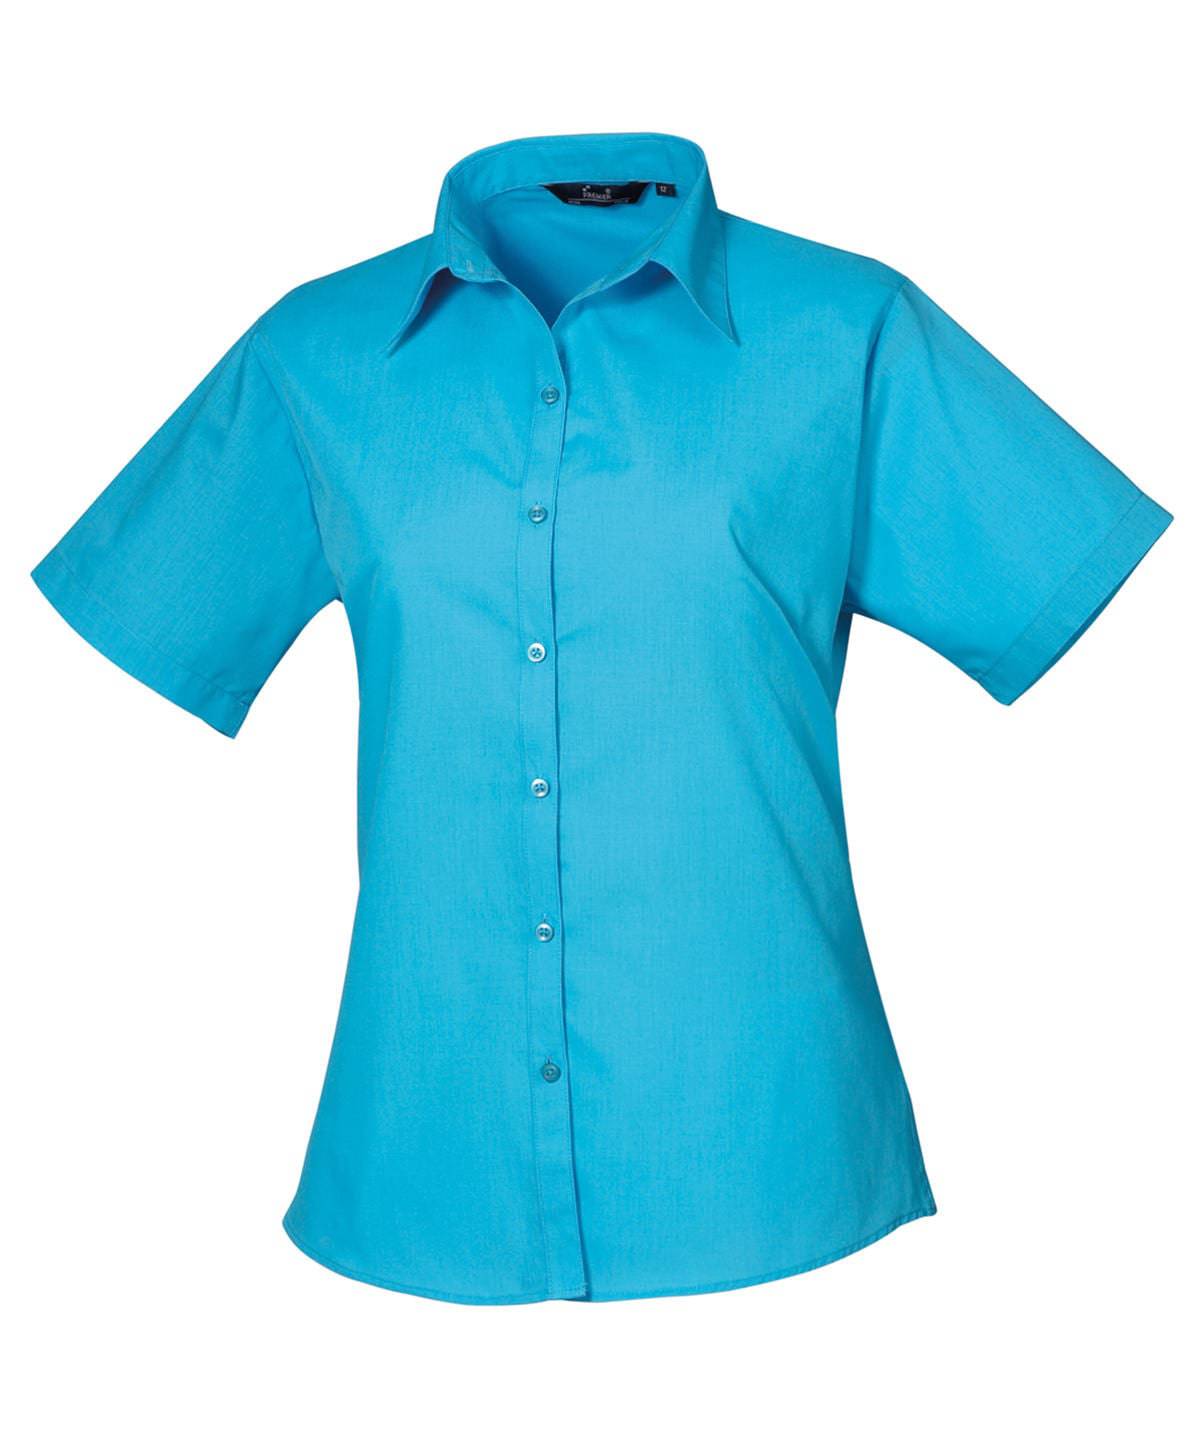 Turquoise* - Women's short sleeve poplin blouse